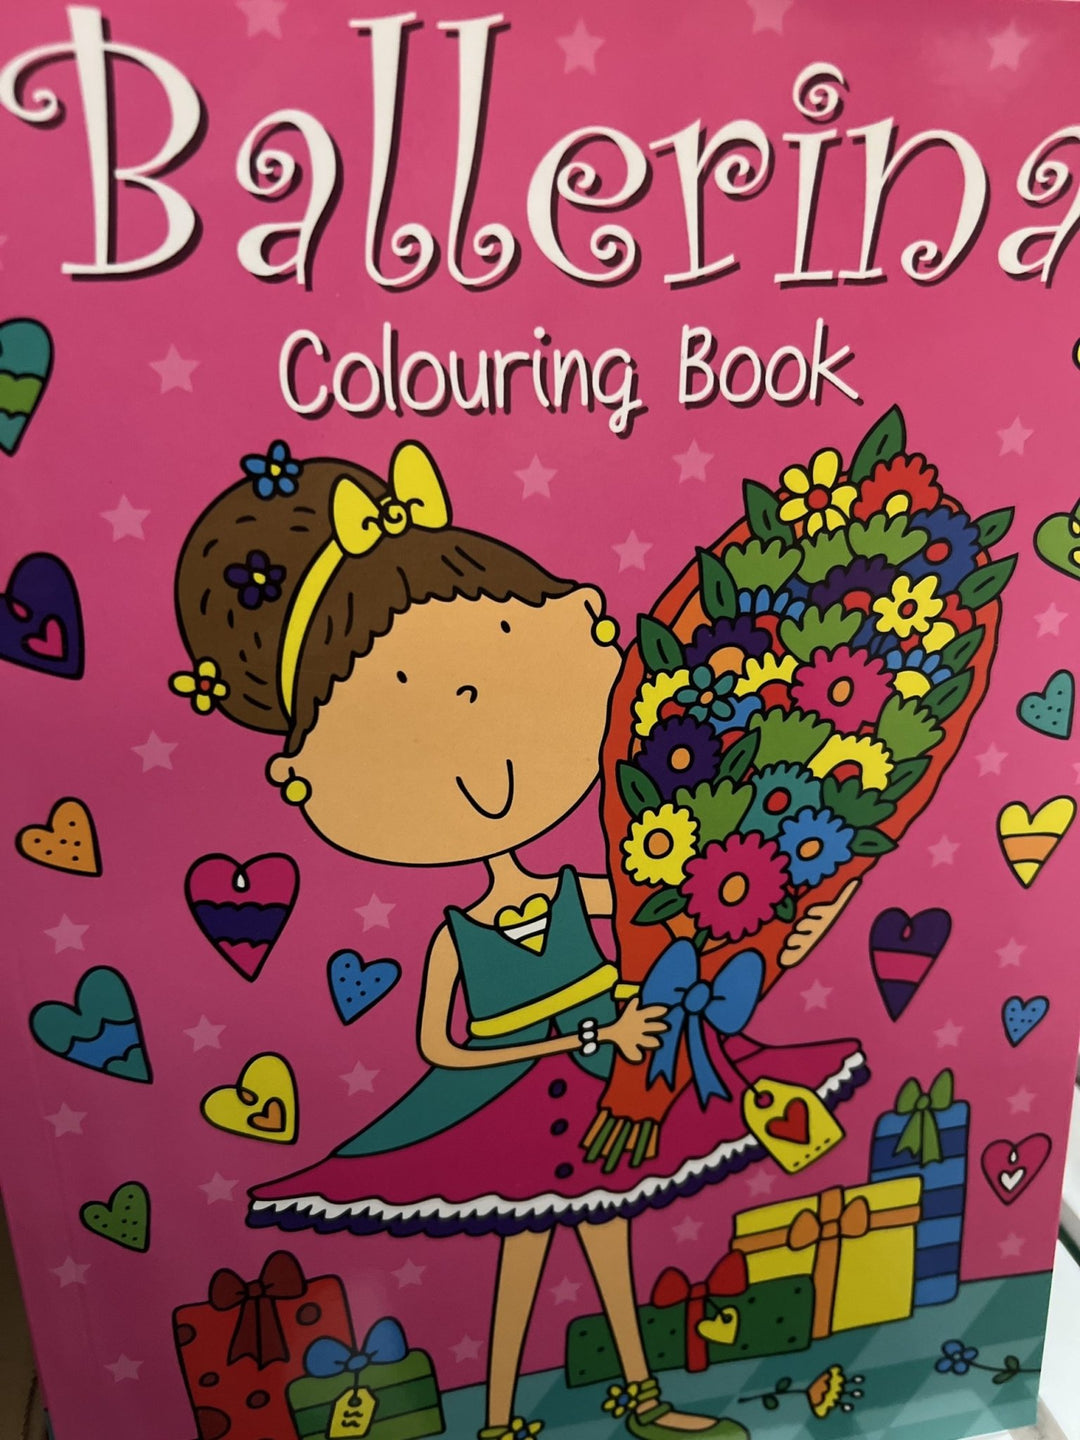 Ballerina Colouring Book - #HolaNanu#NDIS #creativekids